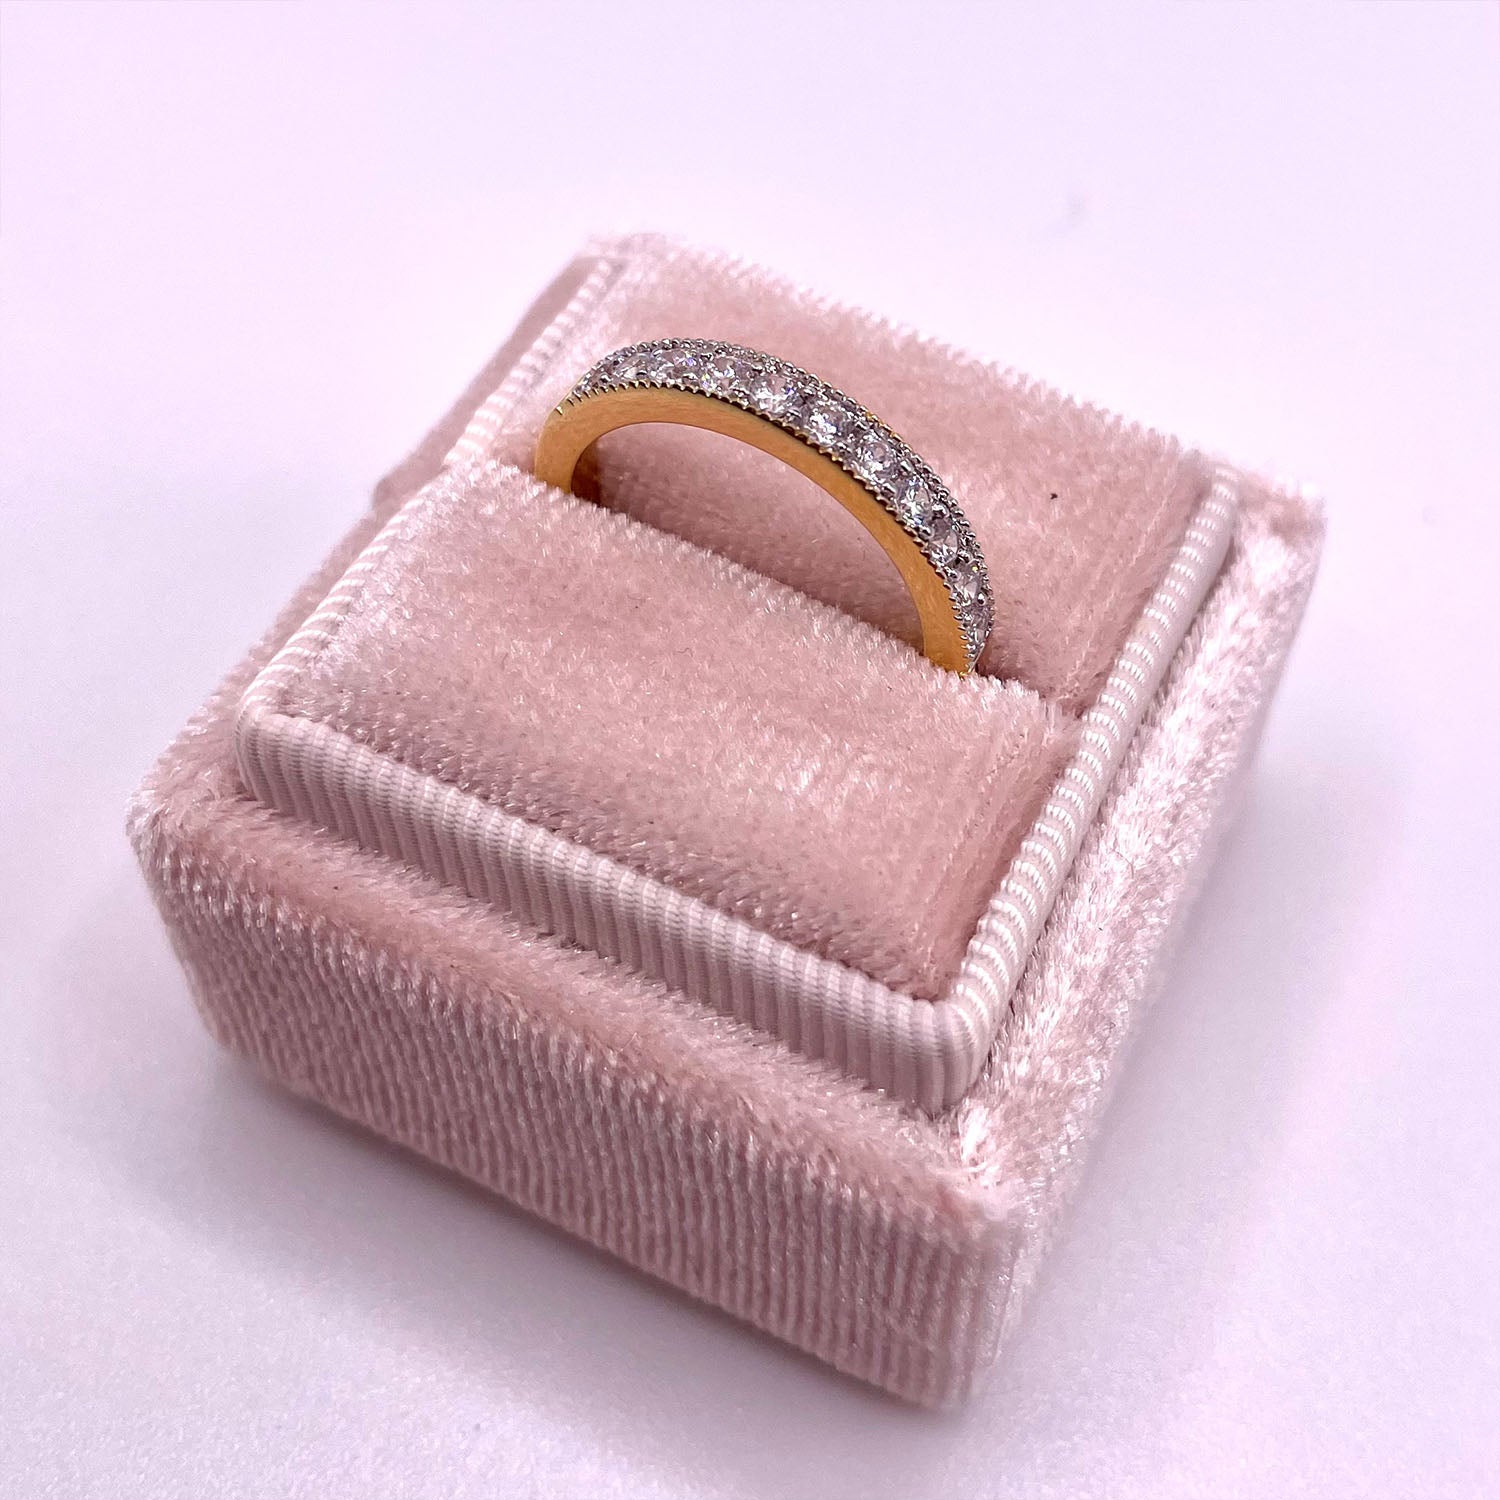 Lucy Round CZ Diamond Stacking Ring, Gold - Zahra Jewelry